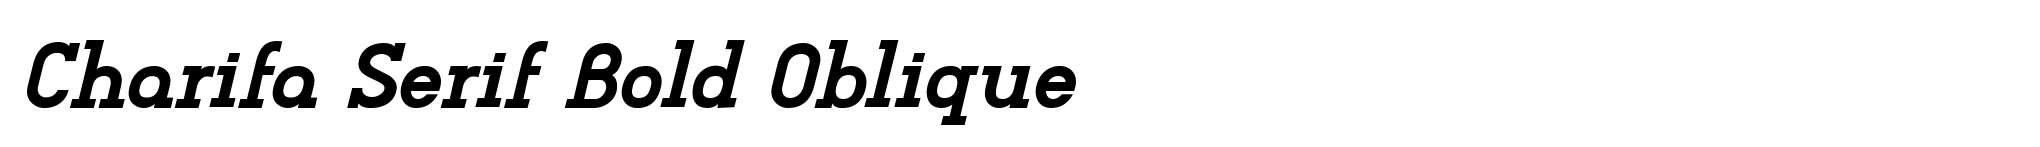 Charifa Serif Bold Oblique image